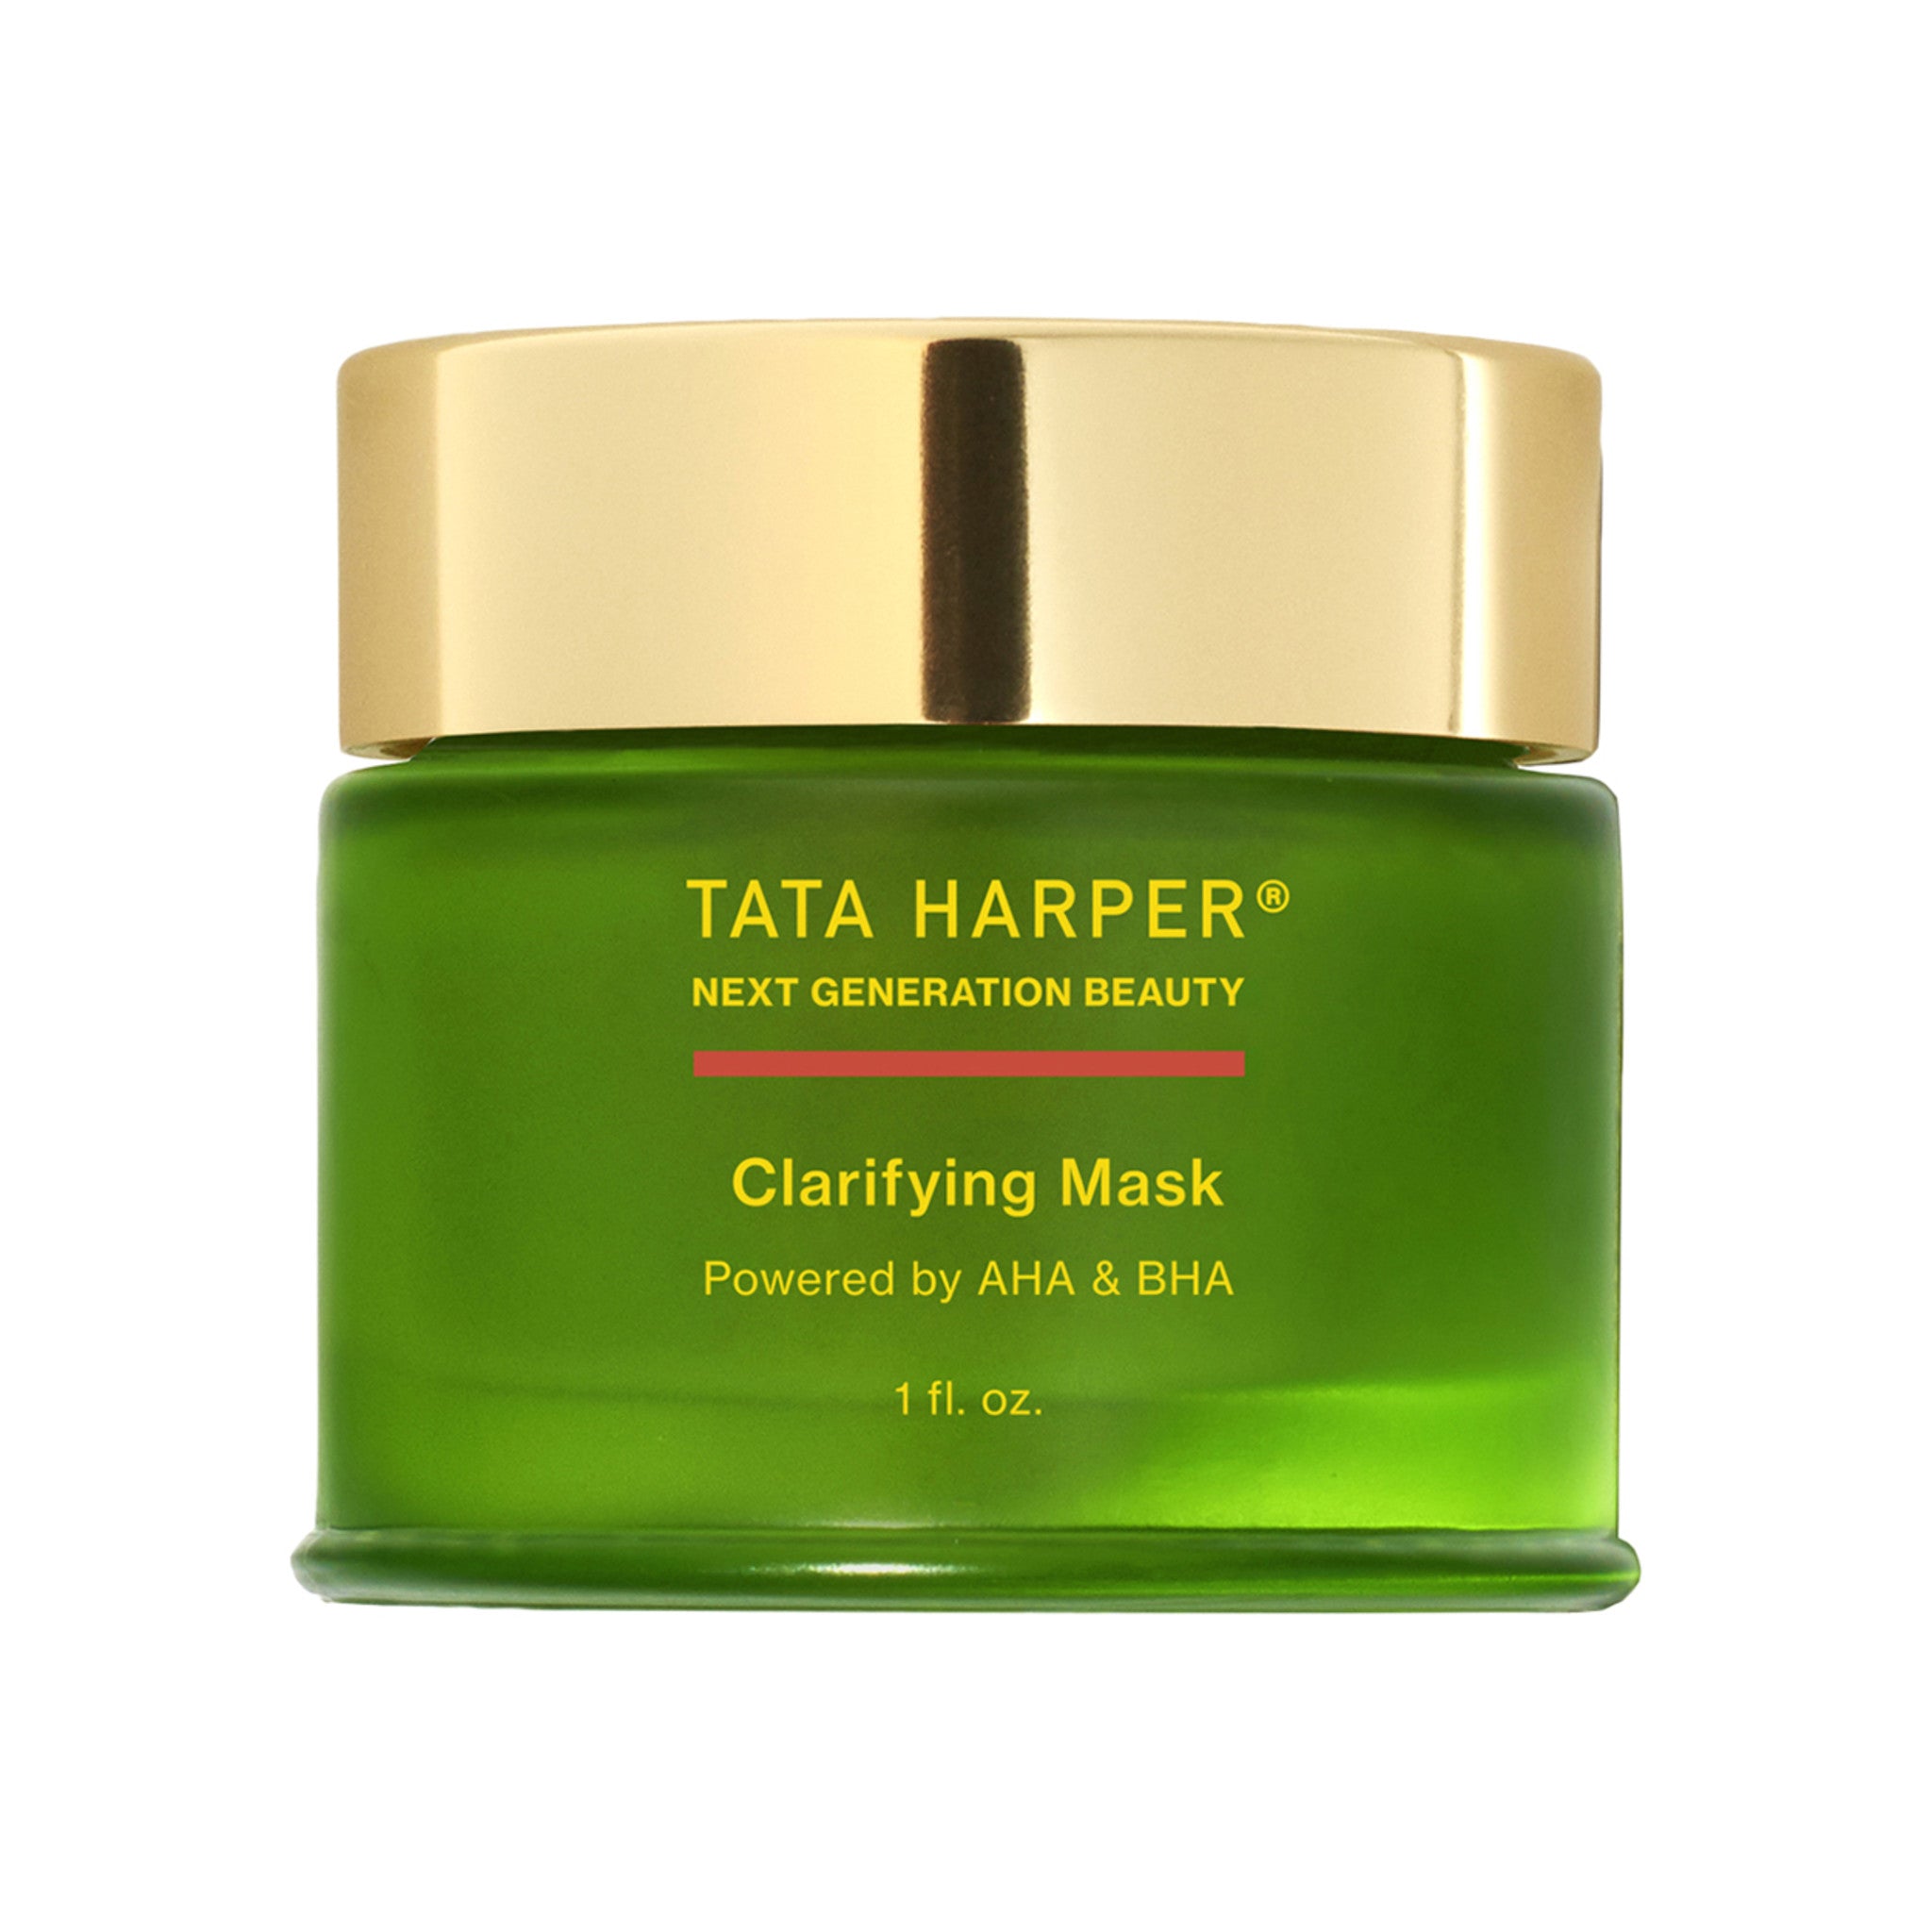 Tata Harper Clarifying Mask main image.